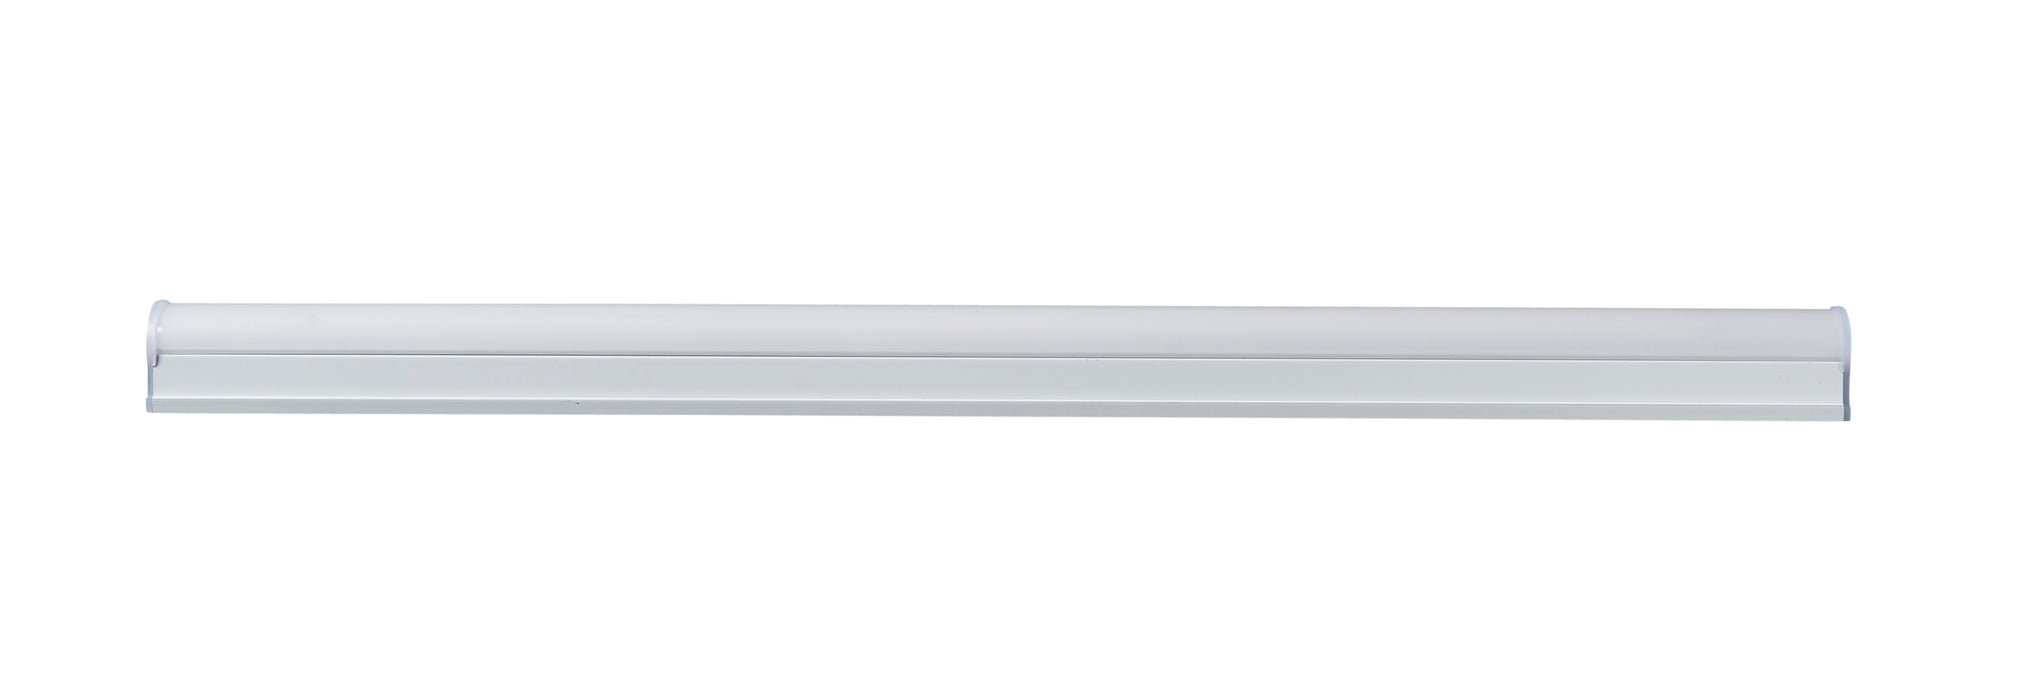 Light Efficient Design 2 Foot Pro Warm CCT Internal Drive Light Bar 6W 2700K (RP-LBI-G1-2F-6W-27K-WC2 )